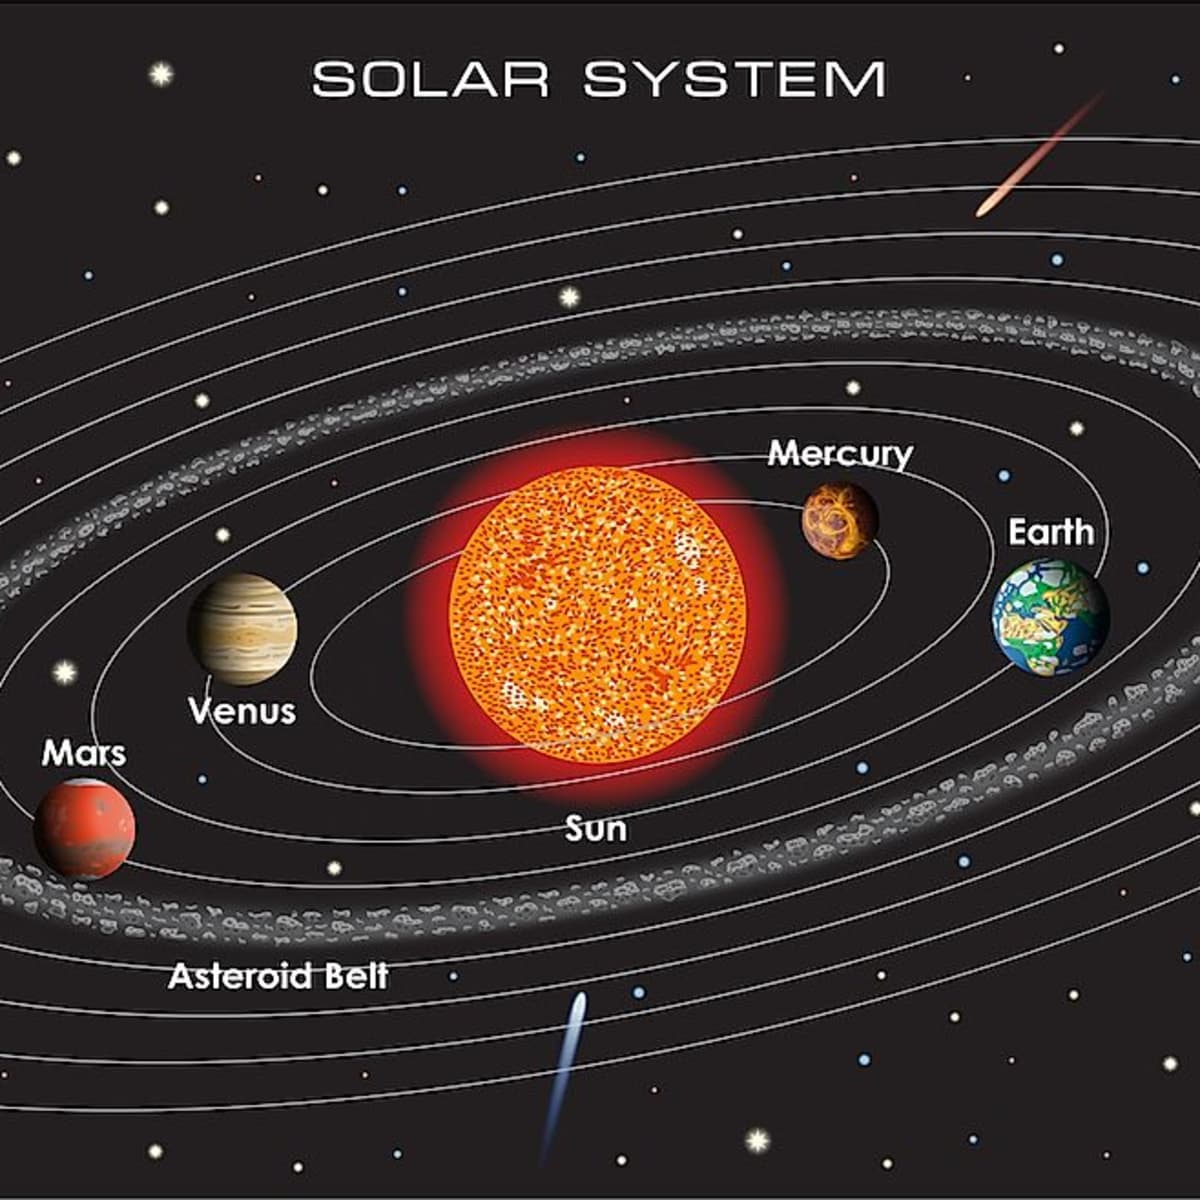 heavenly bodies solar system